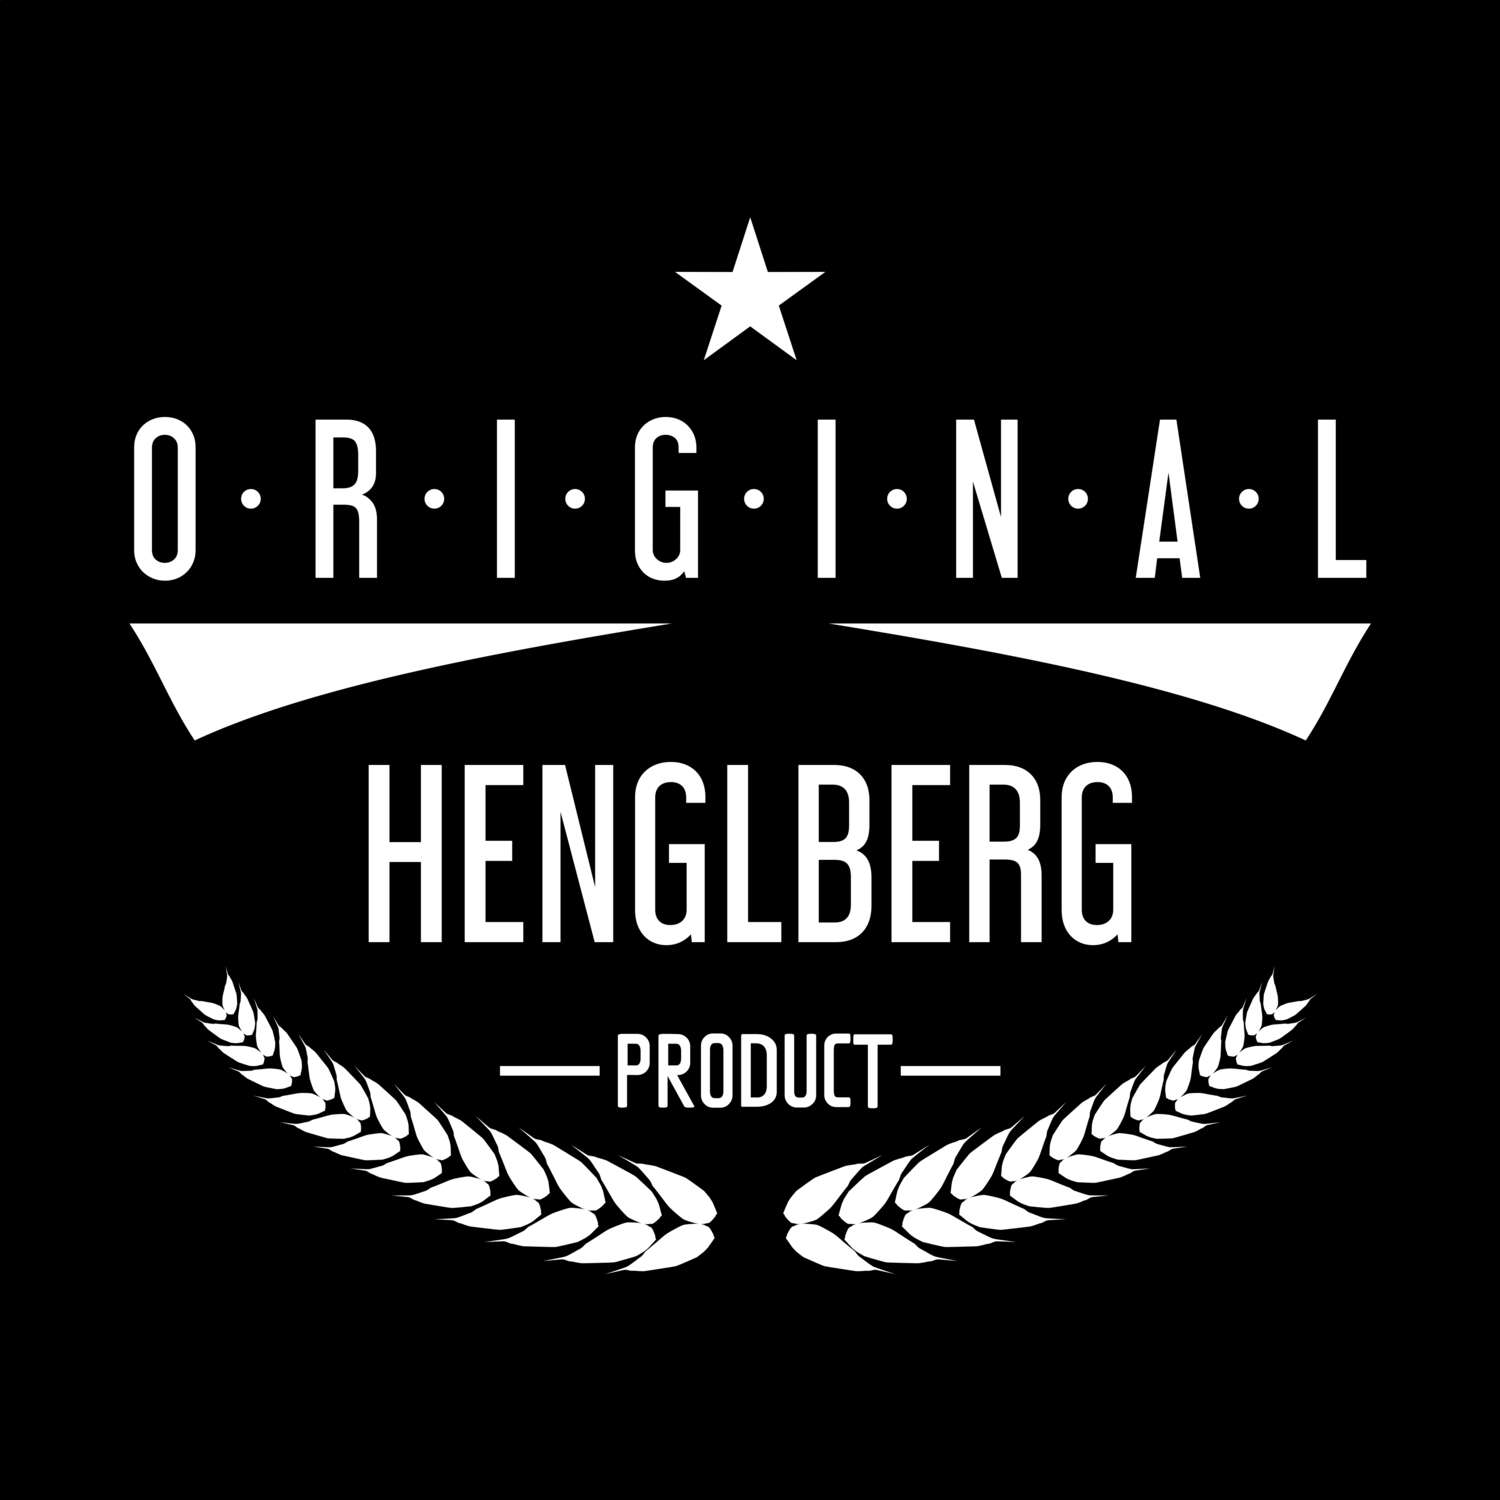 Henglberg T-Shirt »Original Product«